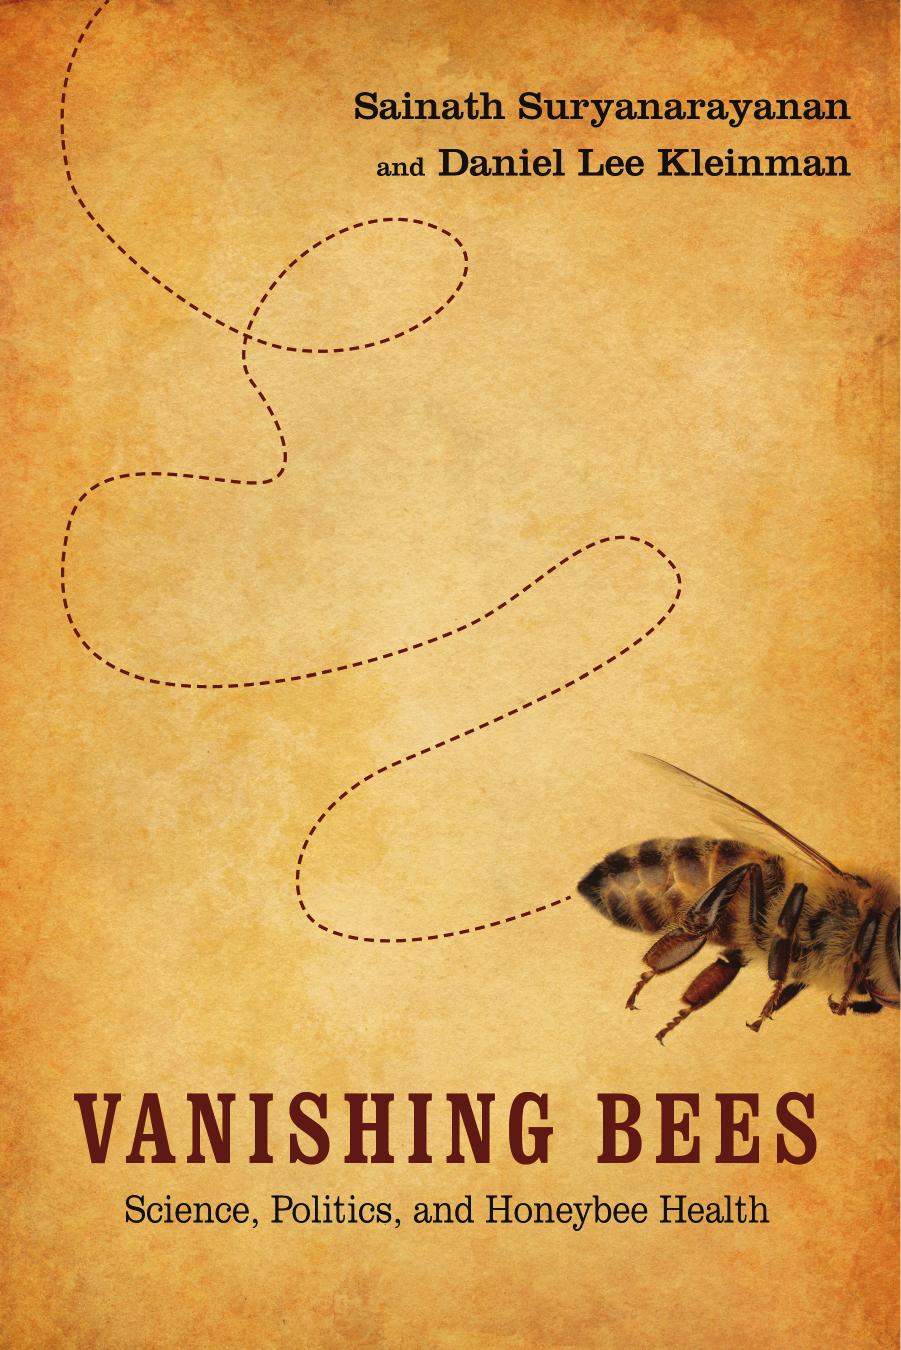 Vanishing Bees : Science, Politics, and Honeybee Health by Sainath Suryanarayanan; Daniel Lee Kleinman